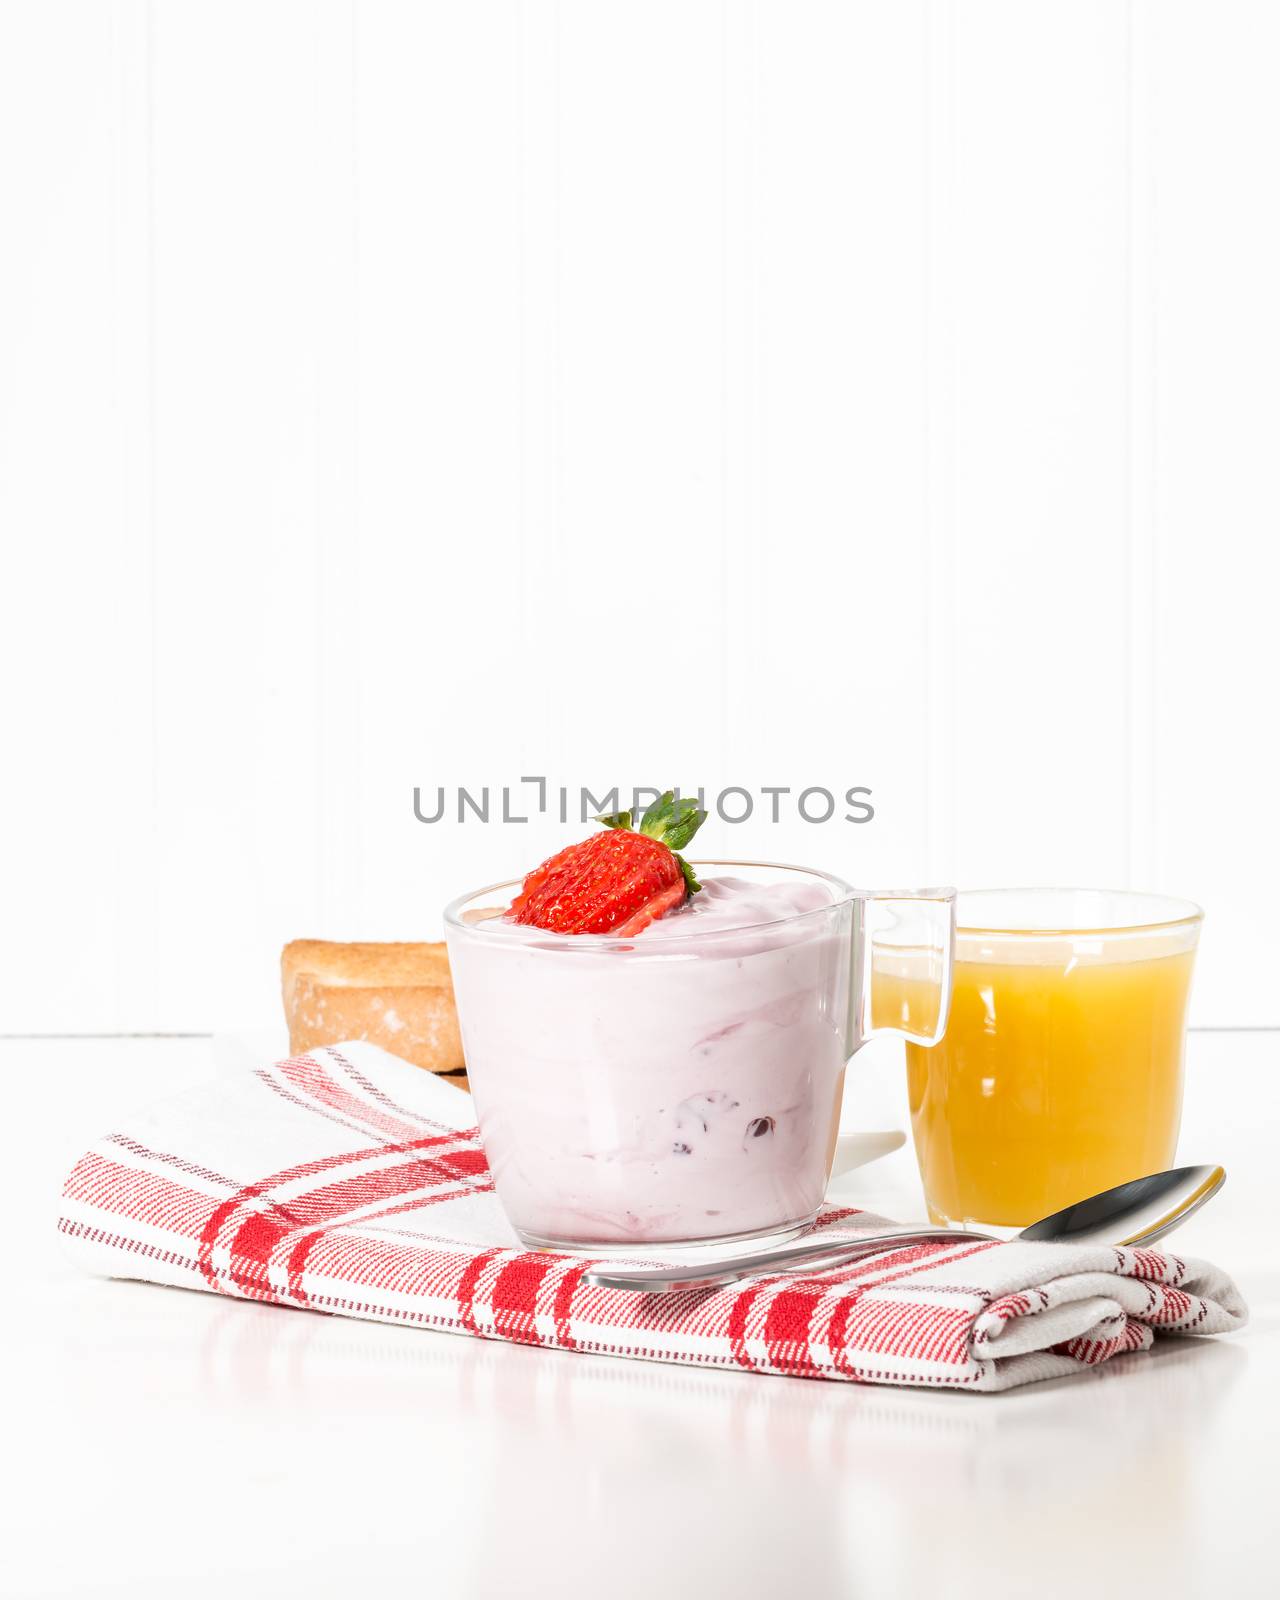 Yogurt Cup Portrait by billberryphotography